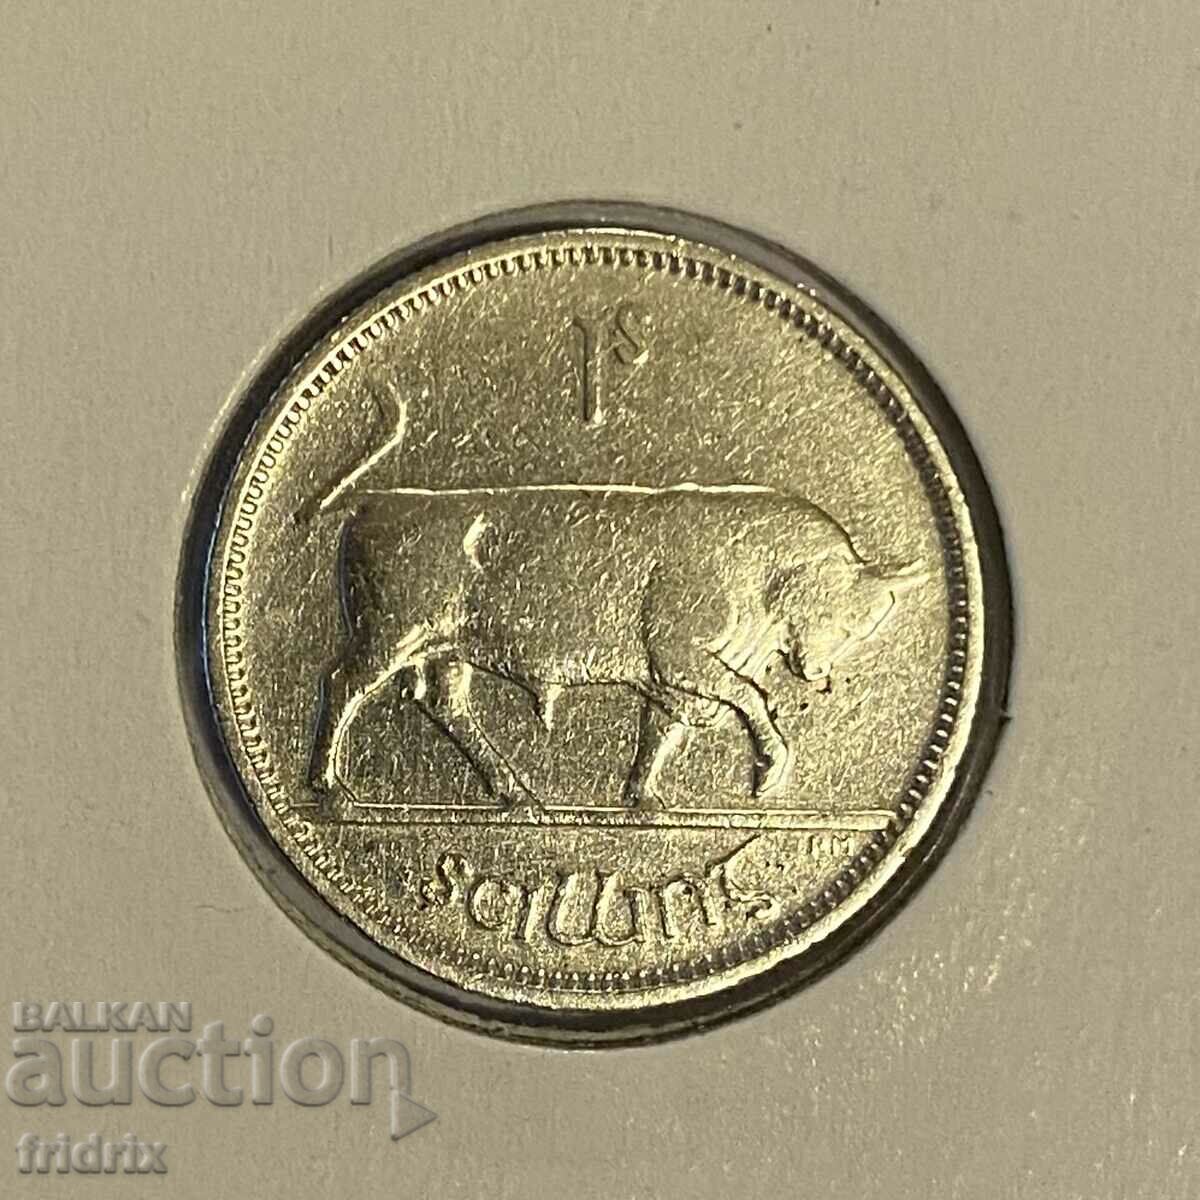 Ireland Rep. 1 shilling / Ireland 1 shilling 1940